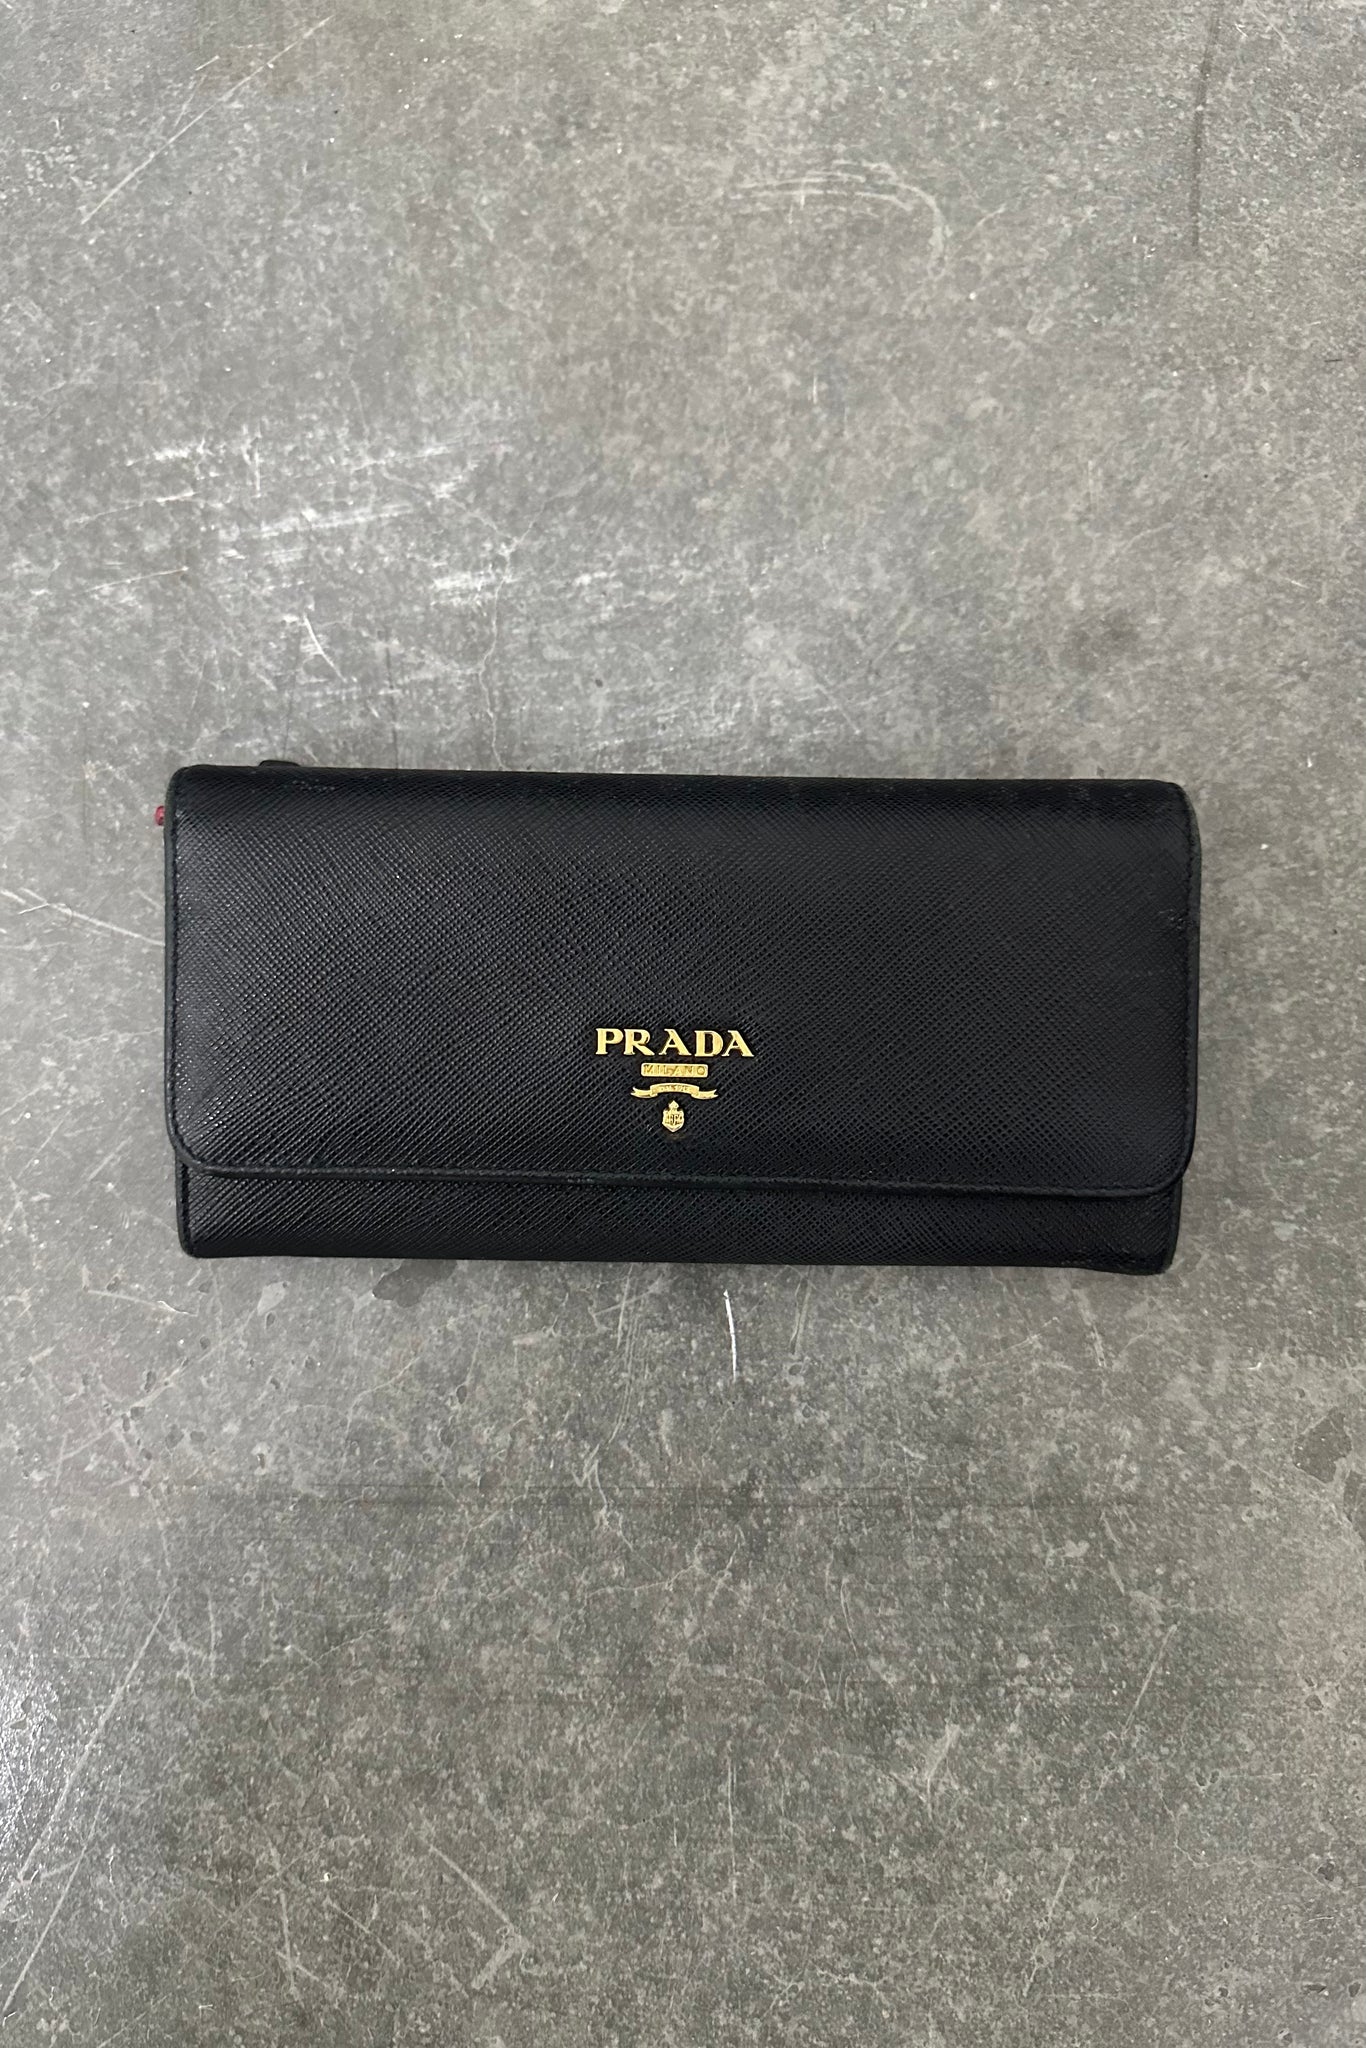 PRADA Logo Saffiano Leather Long Wallet